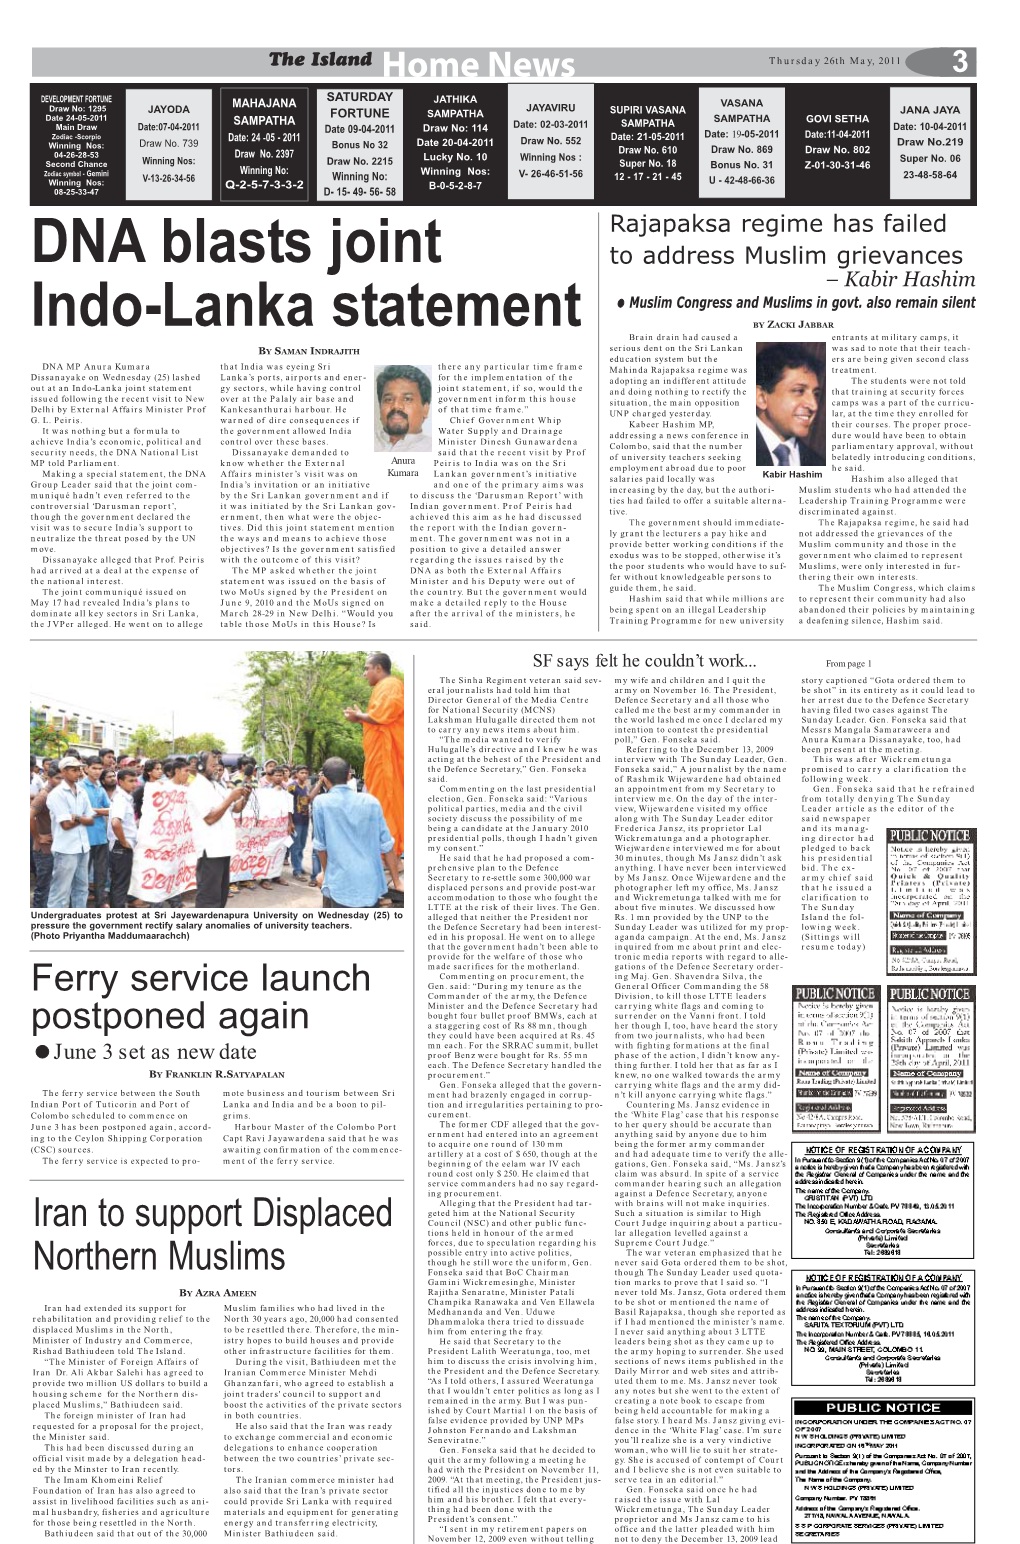 DNA Blasts Joint Indo-Lanka Statement